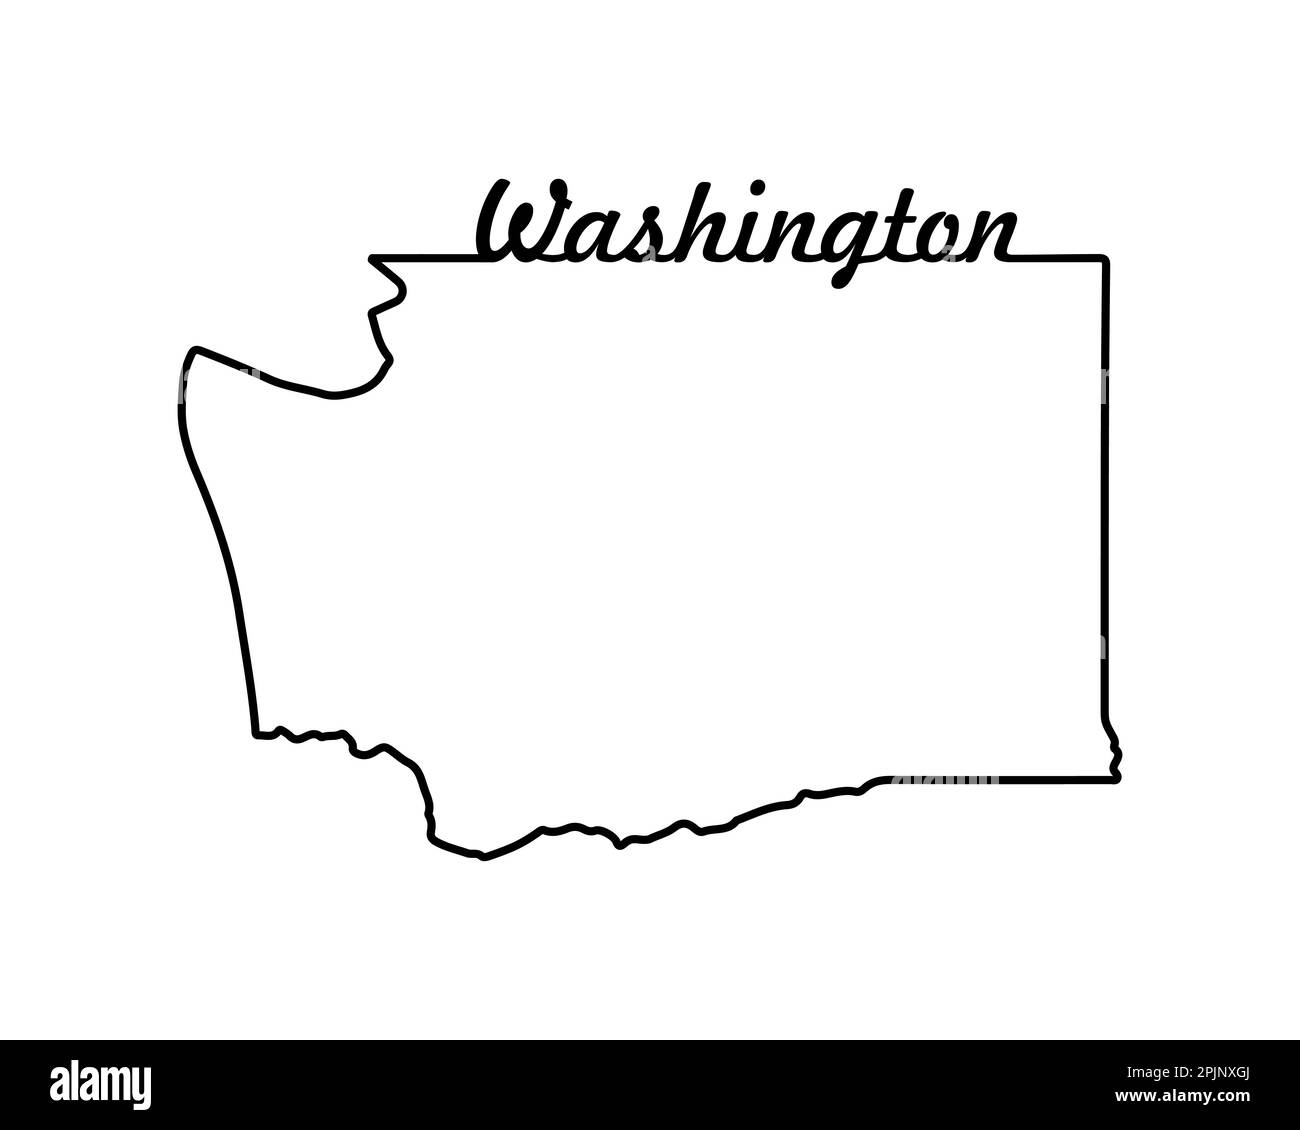 Washington State Map Us State Map Washington Outline Symbol Retro Typography Vector 7822